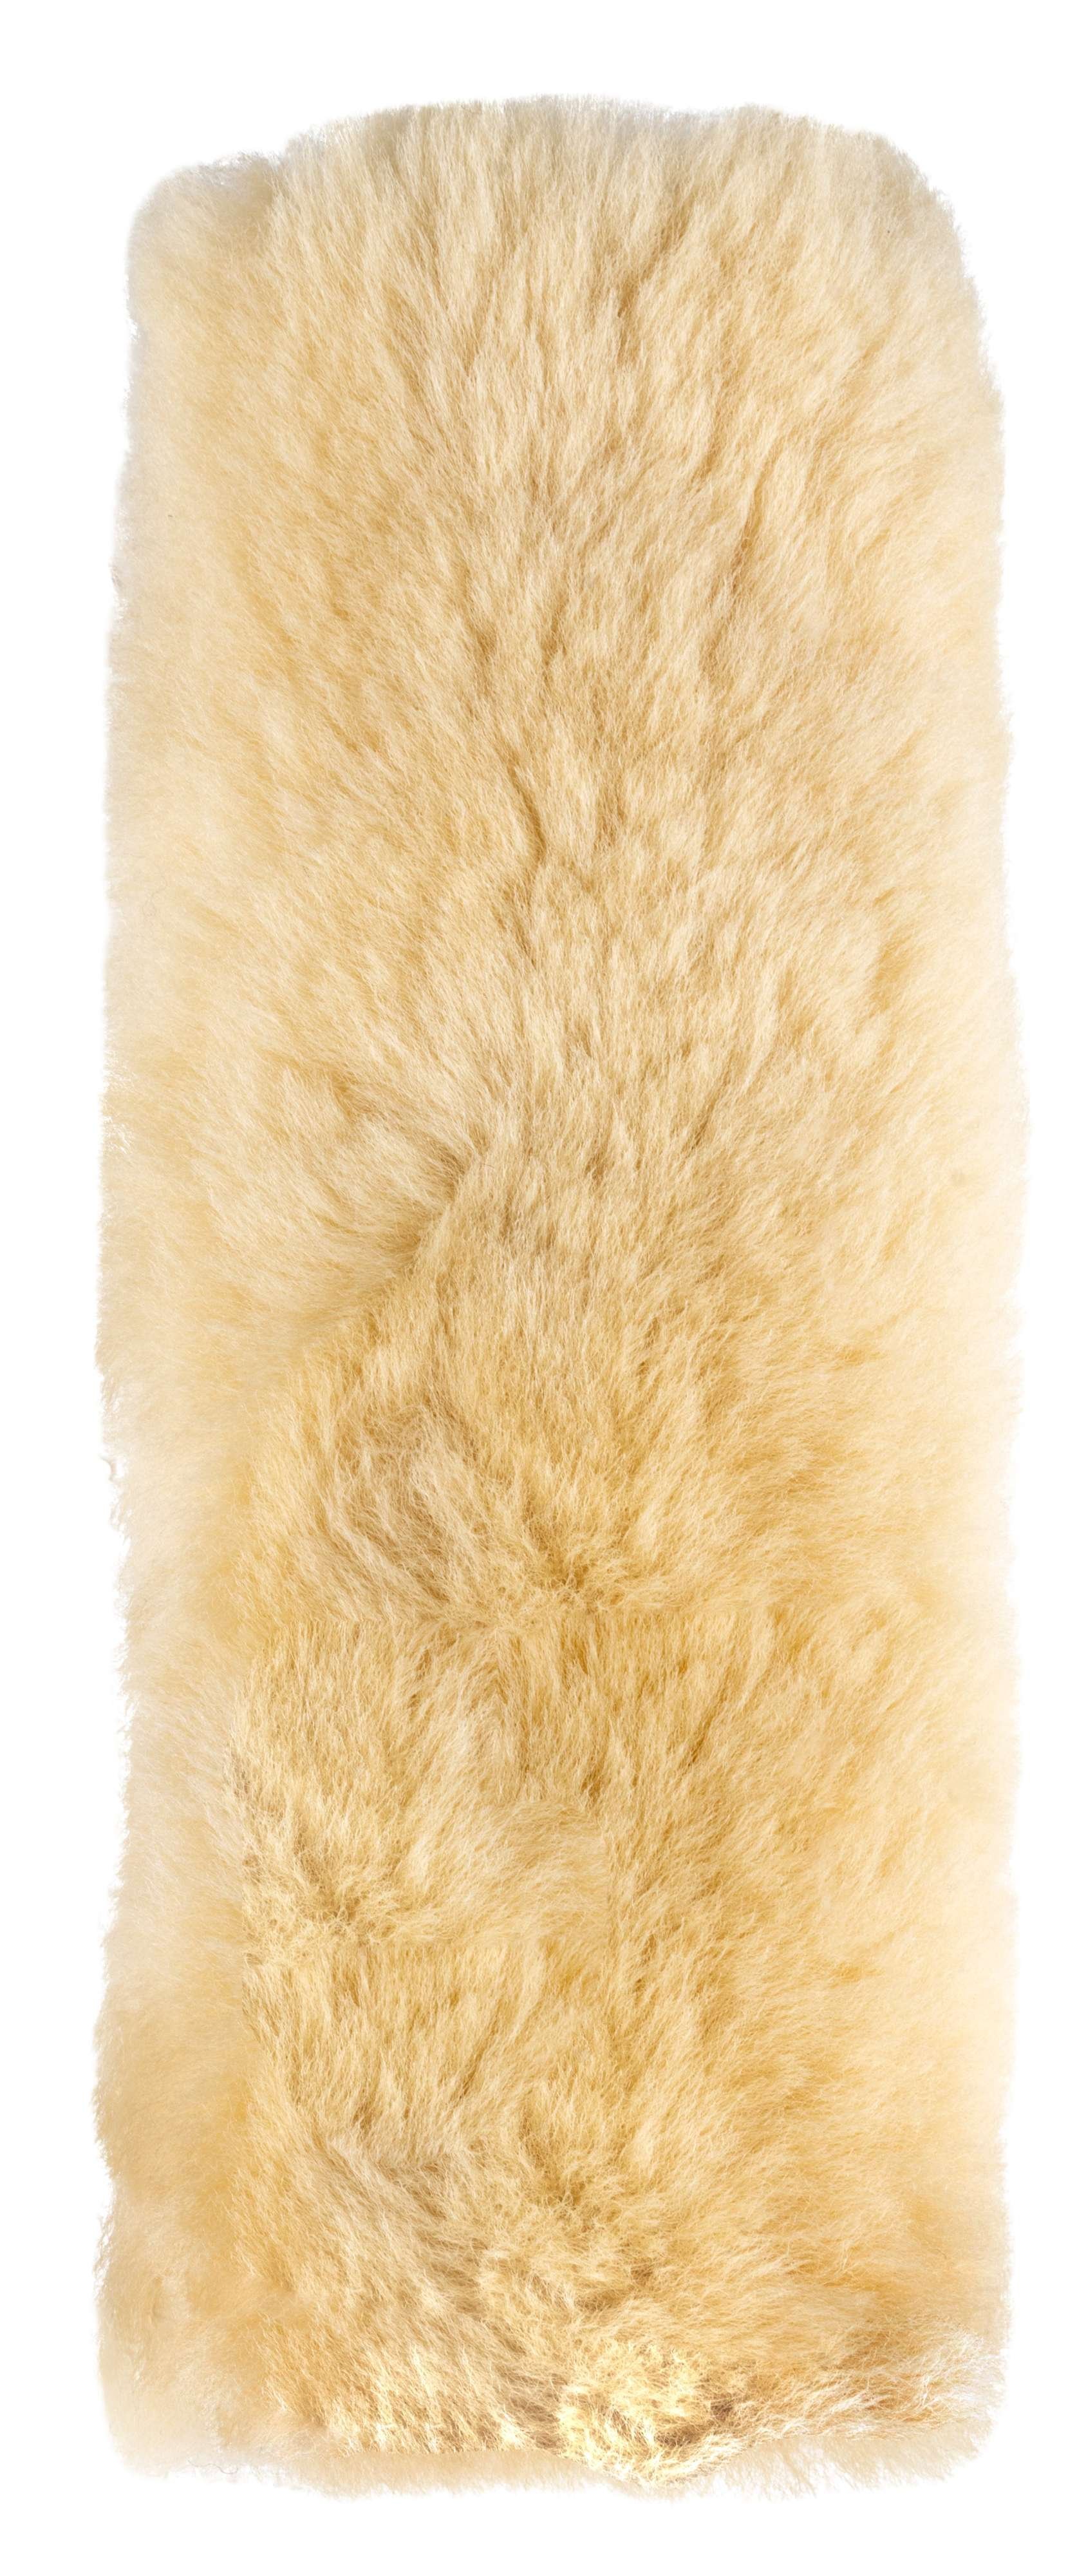 Cuscinetto per cinture di sicurezza Millie in pelle di agnello, 2 pezzi beige